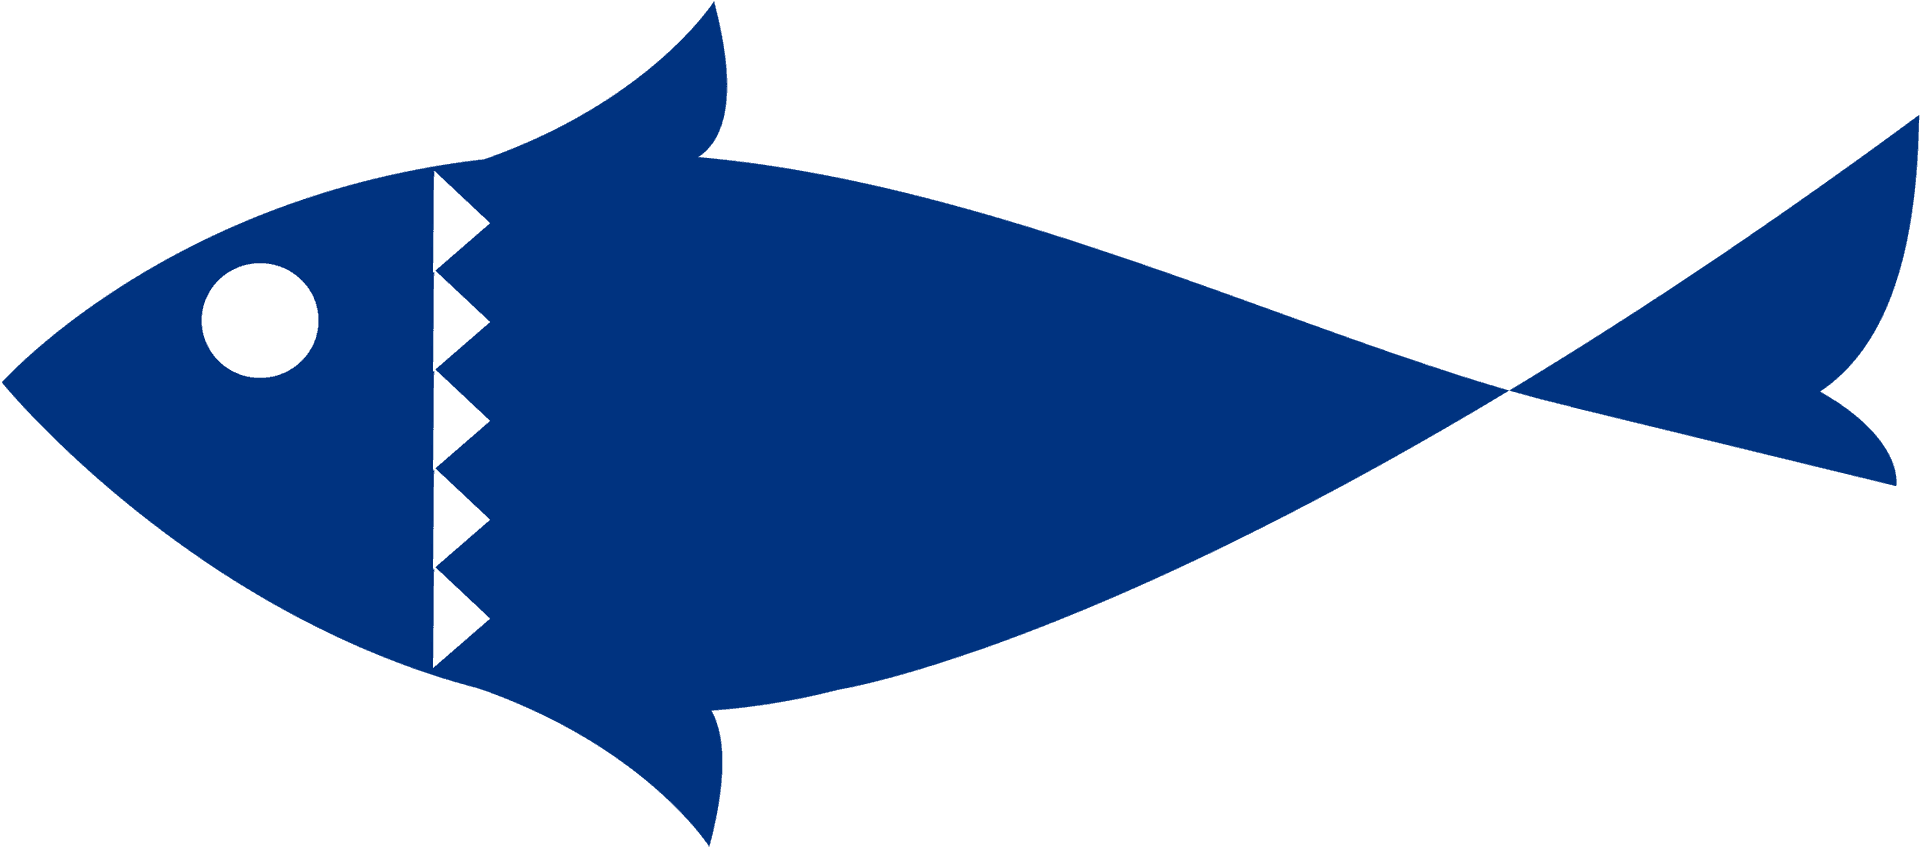 Stylized Blue Tuna Graphic PNG image